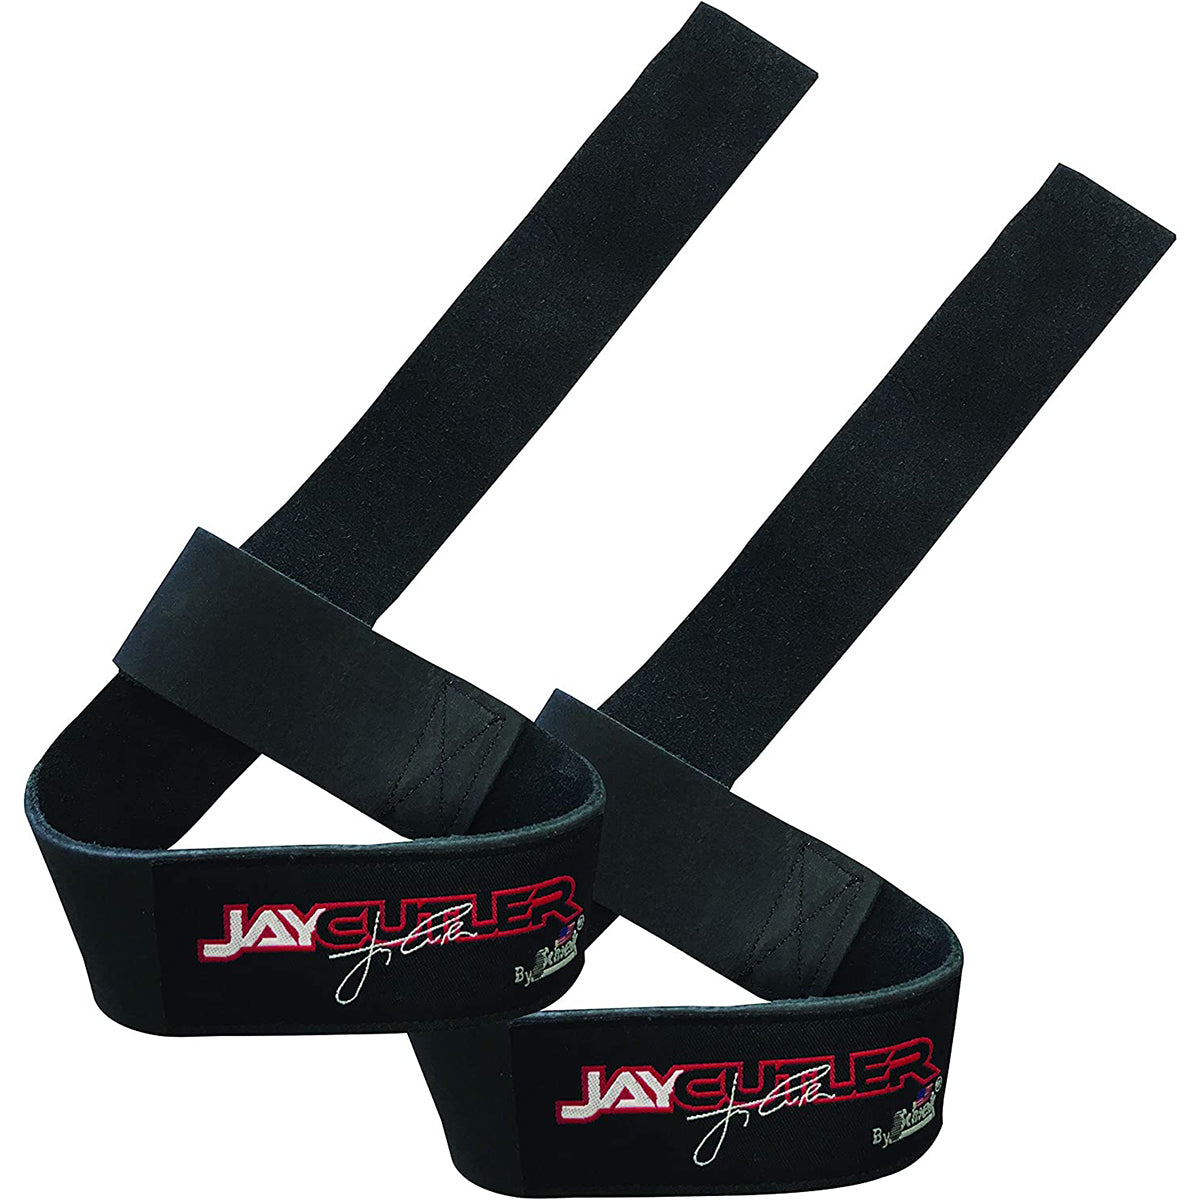 Schiek Sports Model J1000LLS Jay Cutler Signature Leather Lifting Straps - Black Schiek Sports